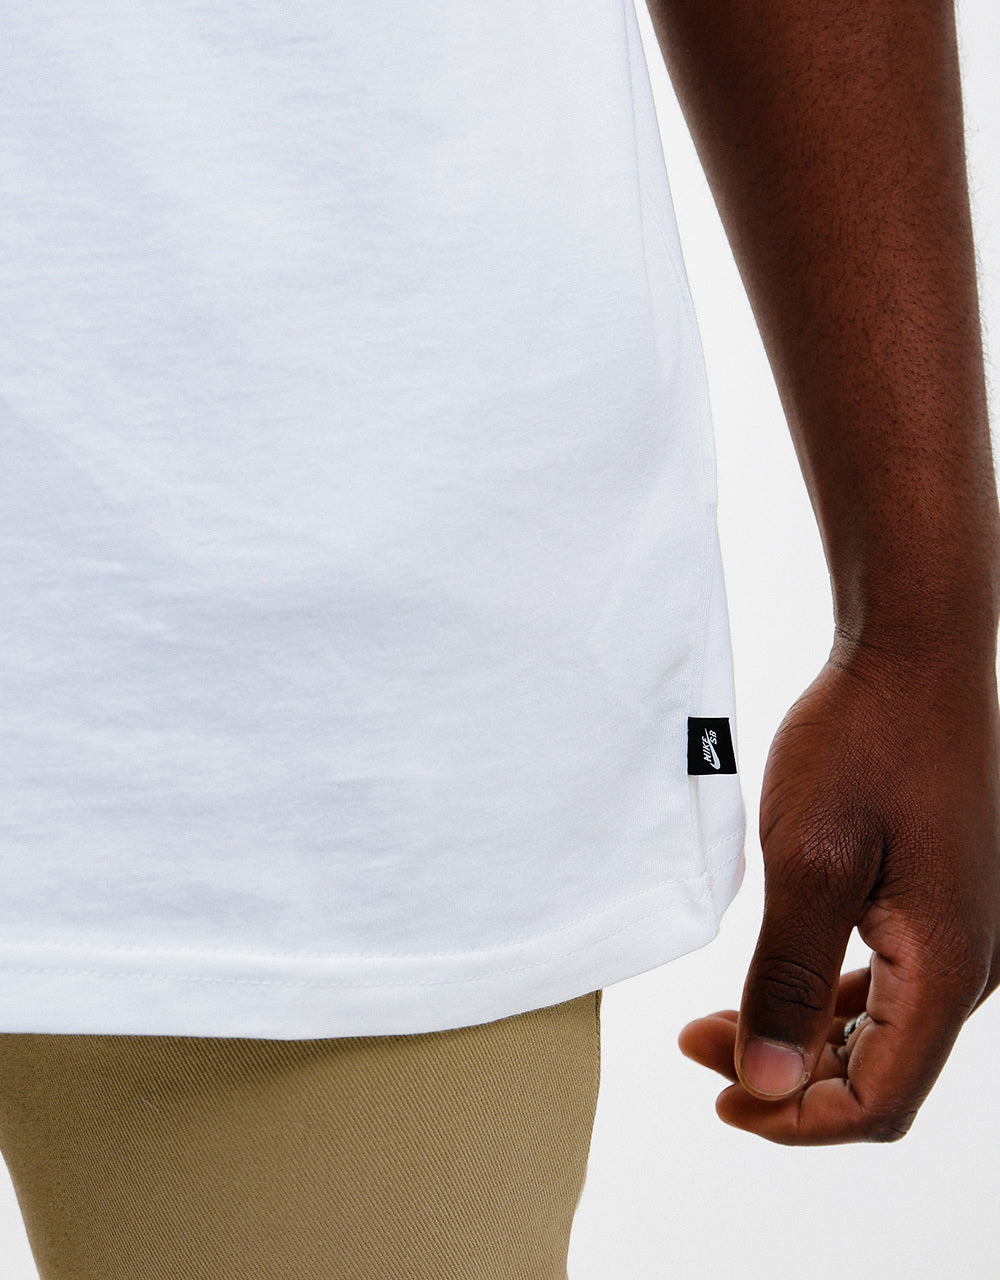 Nike SB Logo T-Shirt - White/Black